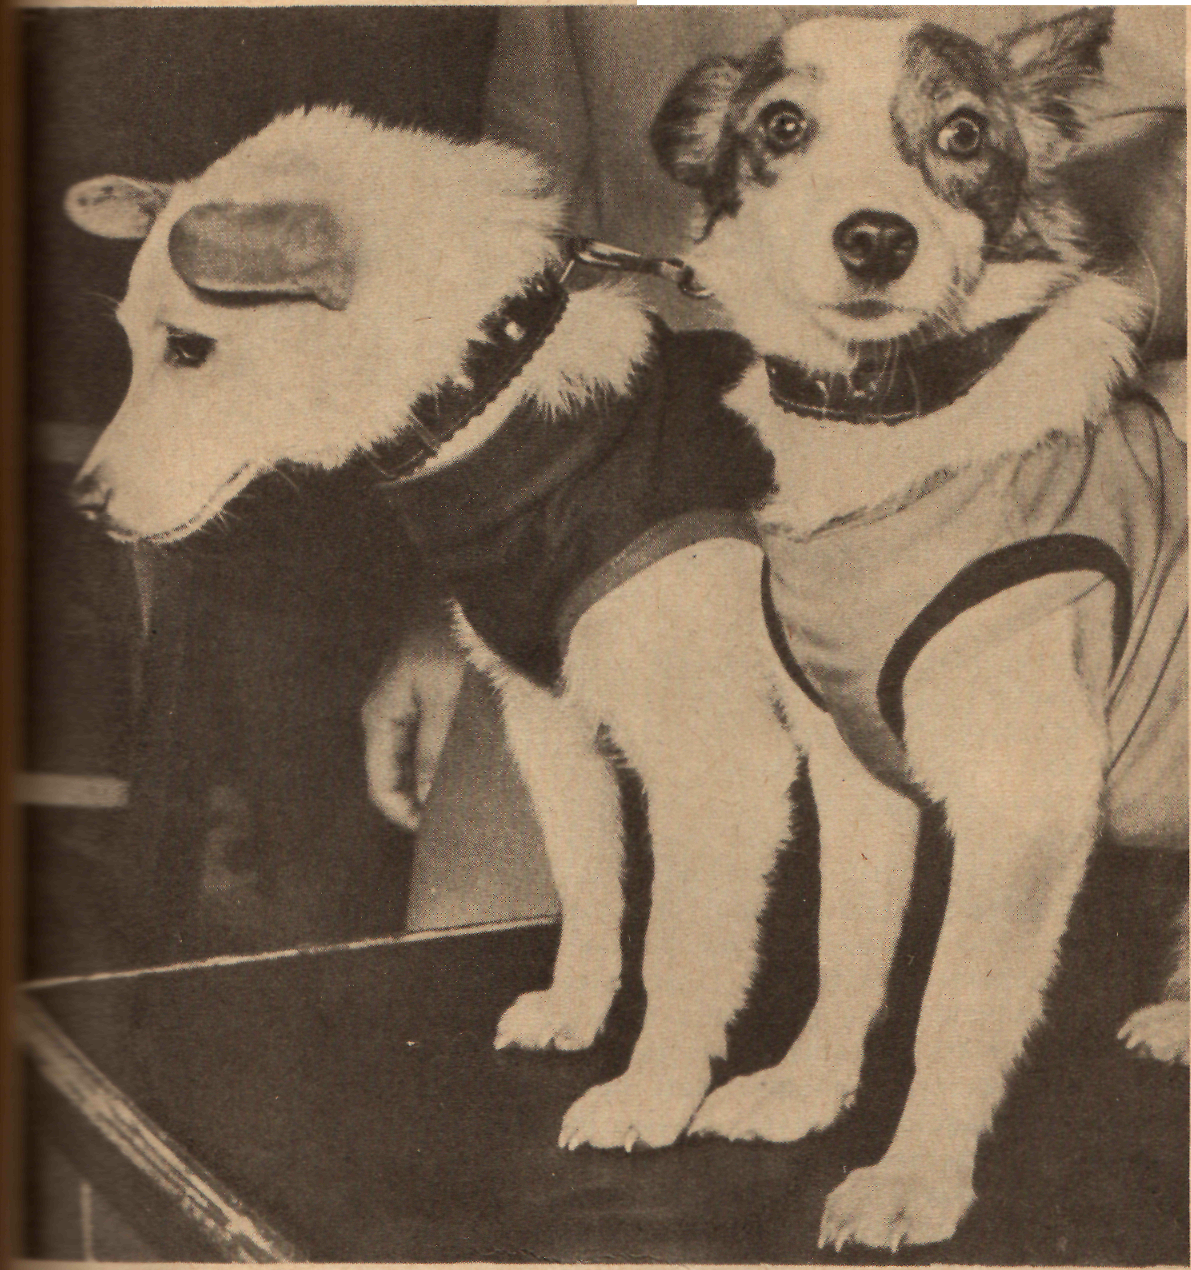 Две собаки в космосе. Белка и стрелка 1960. Собаки-космонавты белка и стрелка-1. Белка и стрелка полёт в космос 1958. Белка и стрелка первые собаки в космосе.